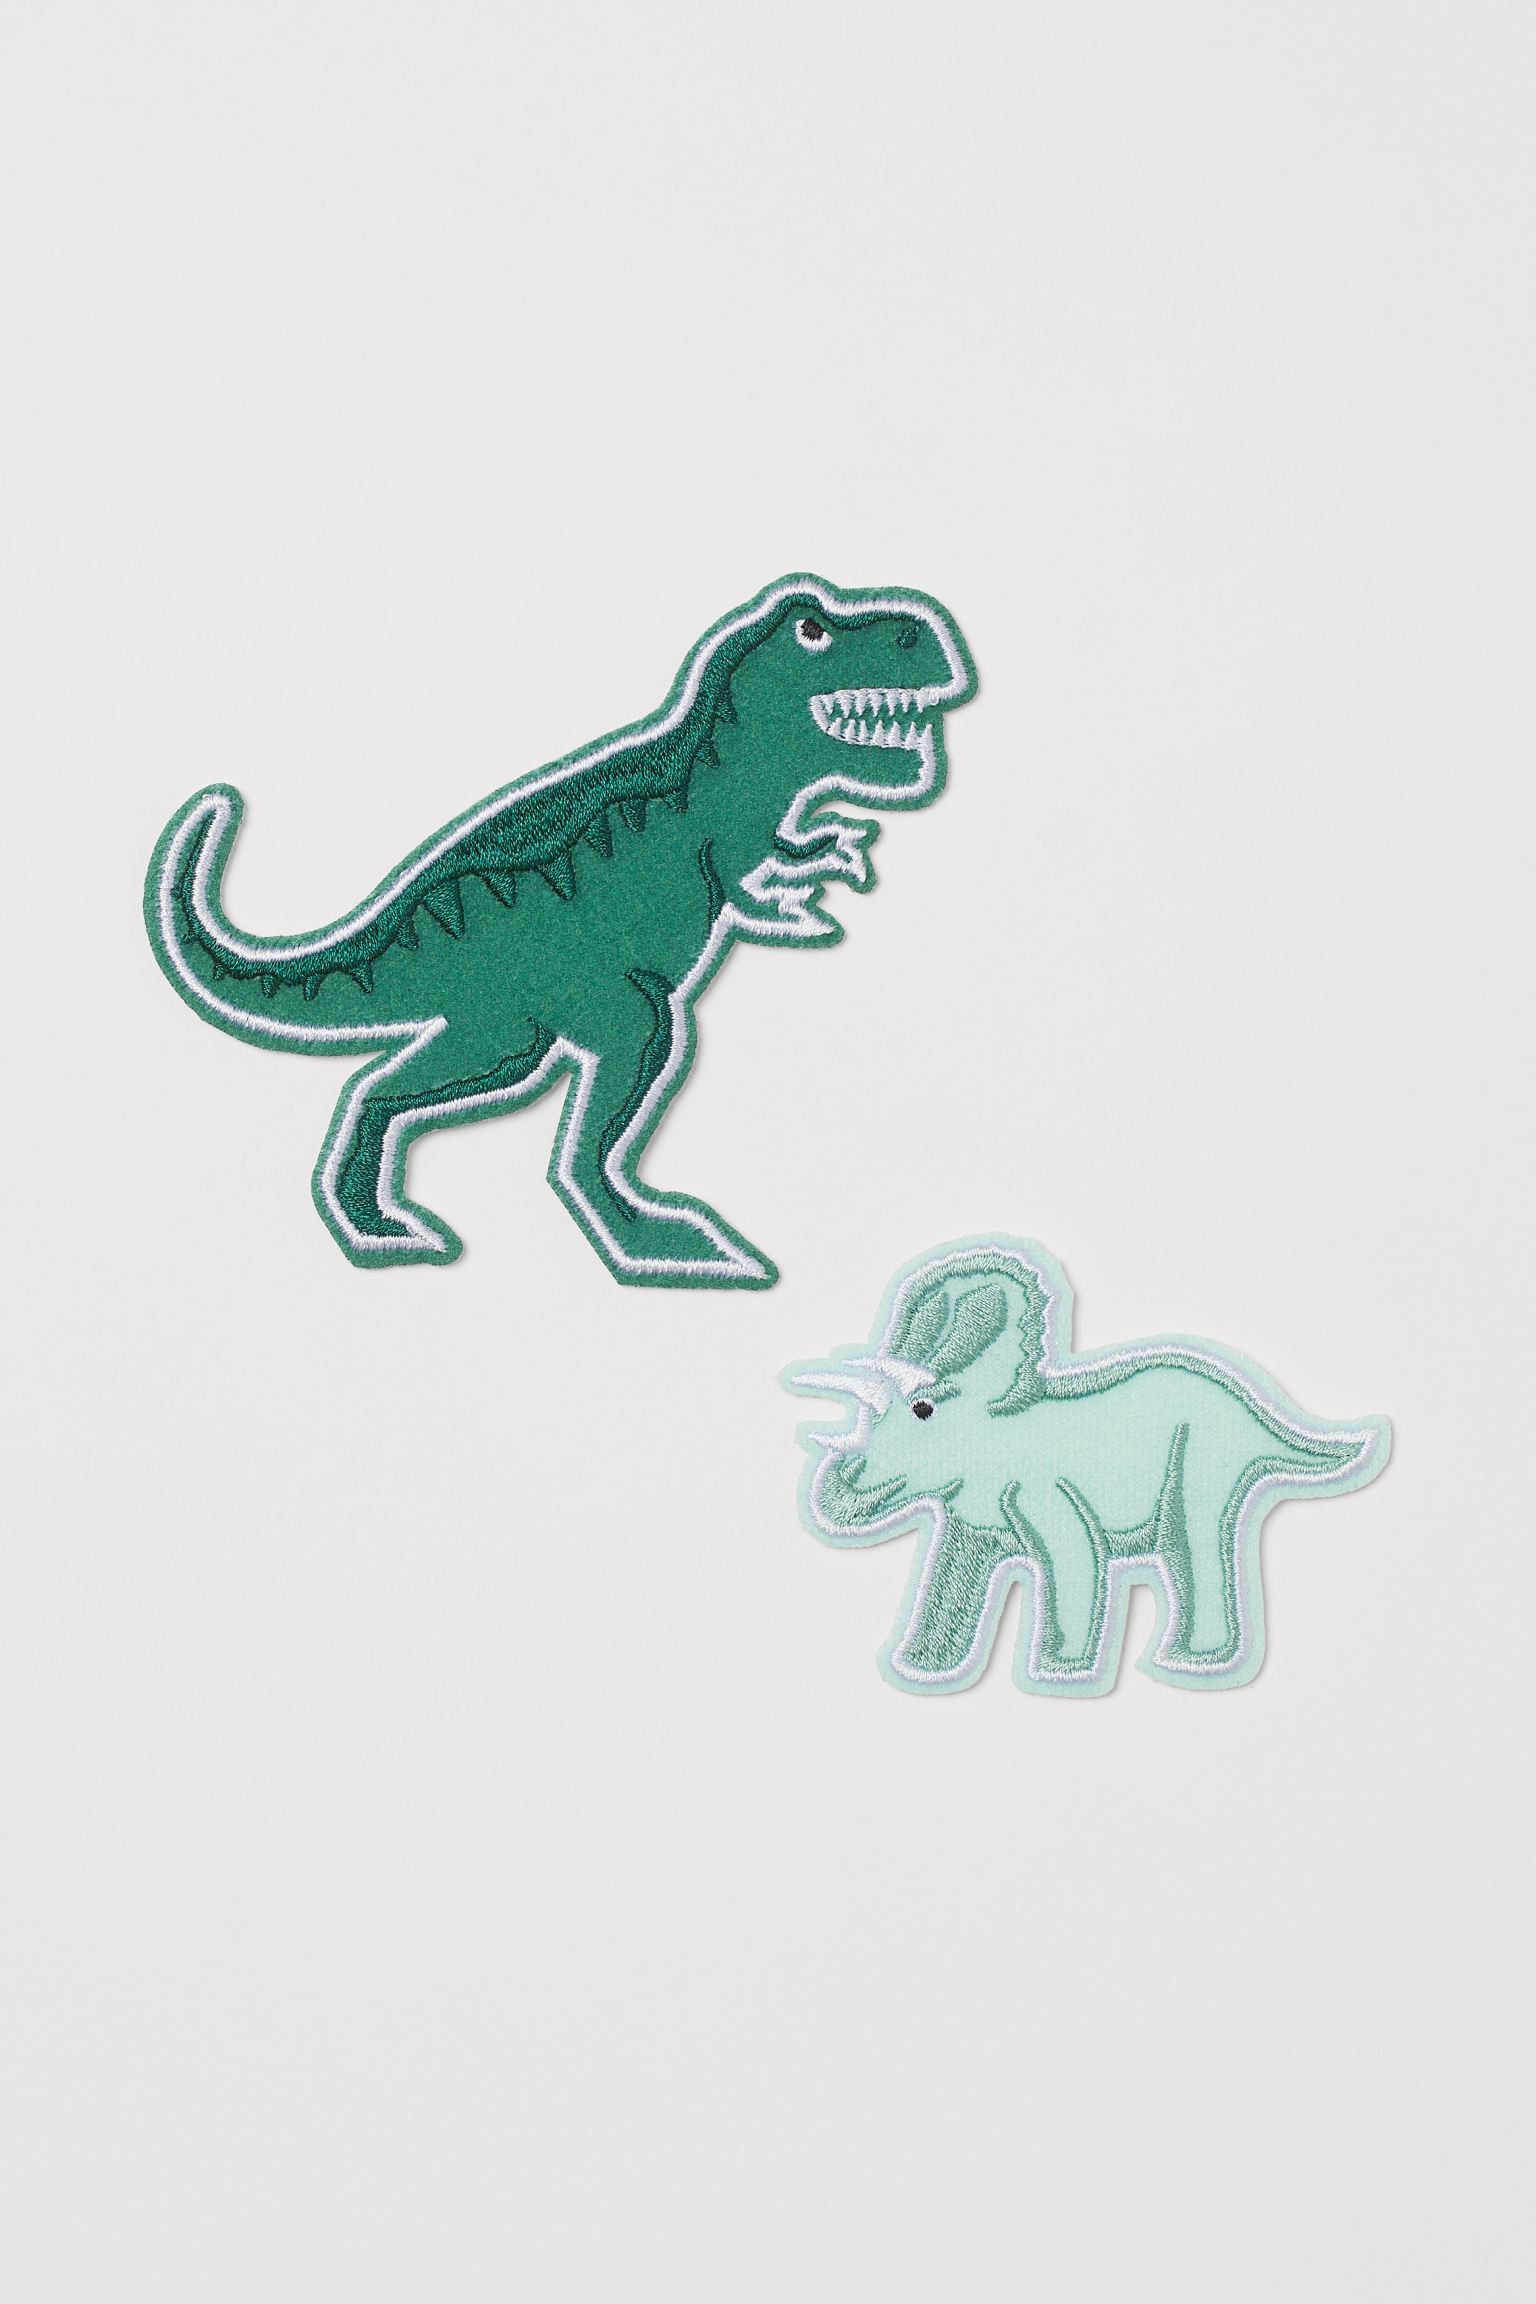 Нашивка термоклейка з мотивом динозавра, 2 шт., Зелений/Динозаври